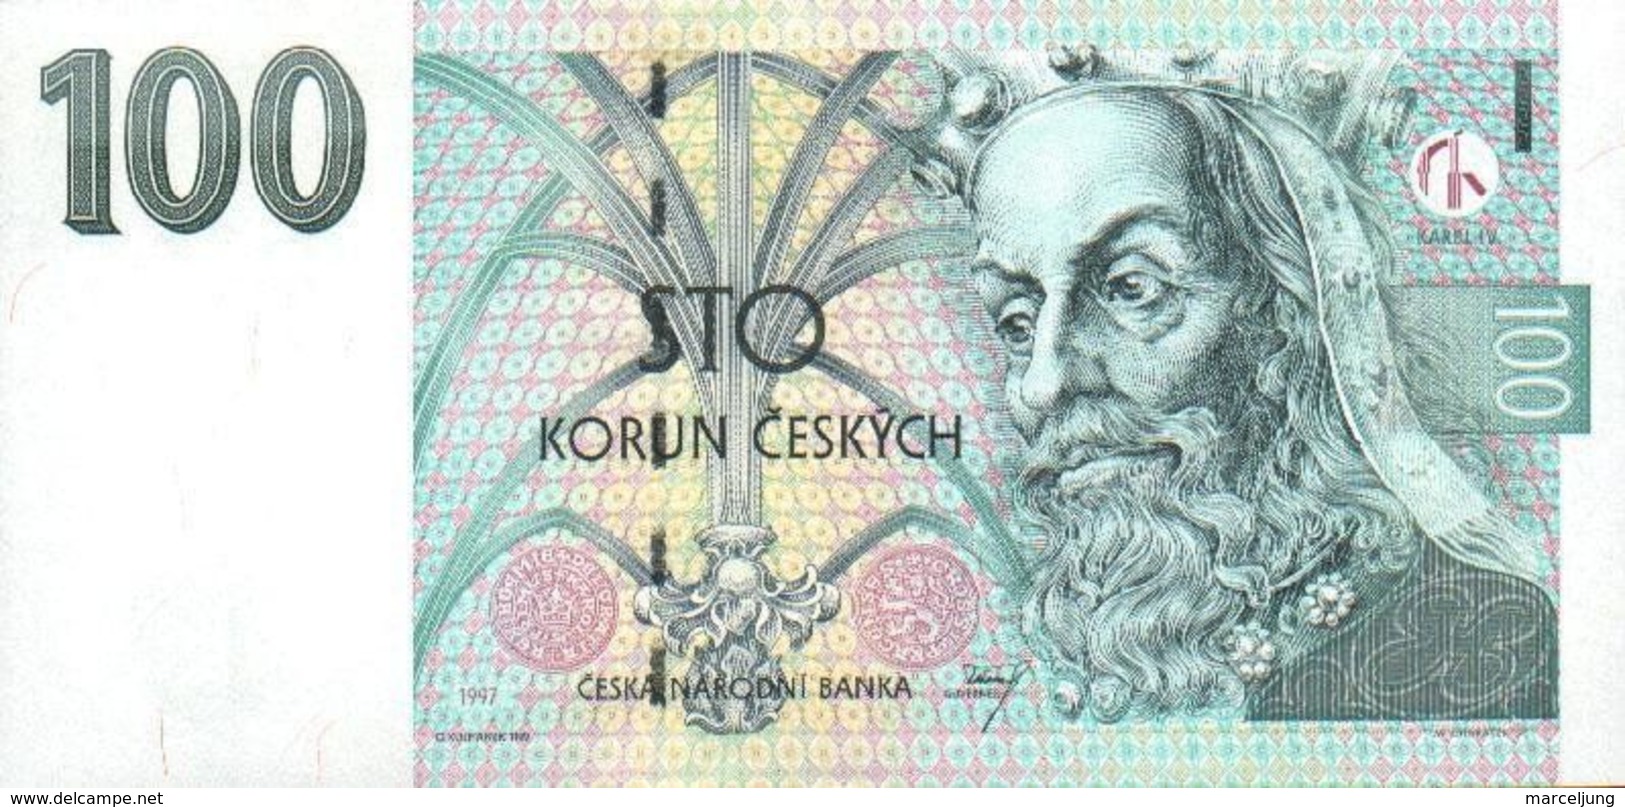 100 Korun Czech Republic UNC 1997 - República Checa